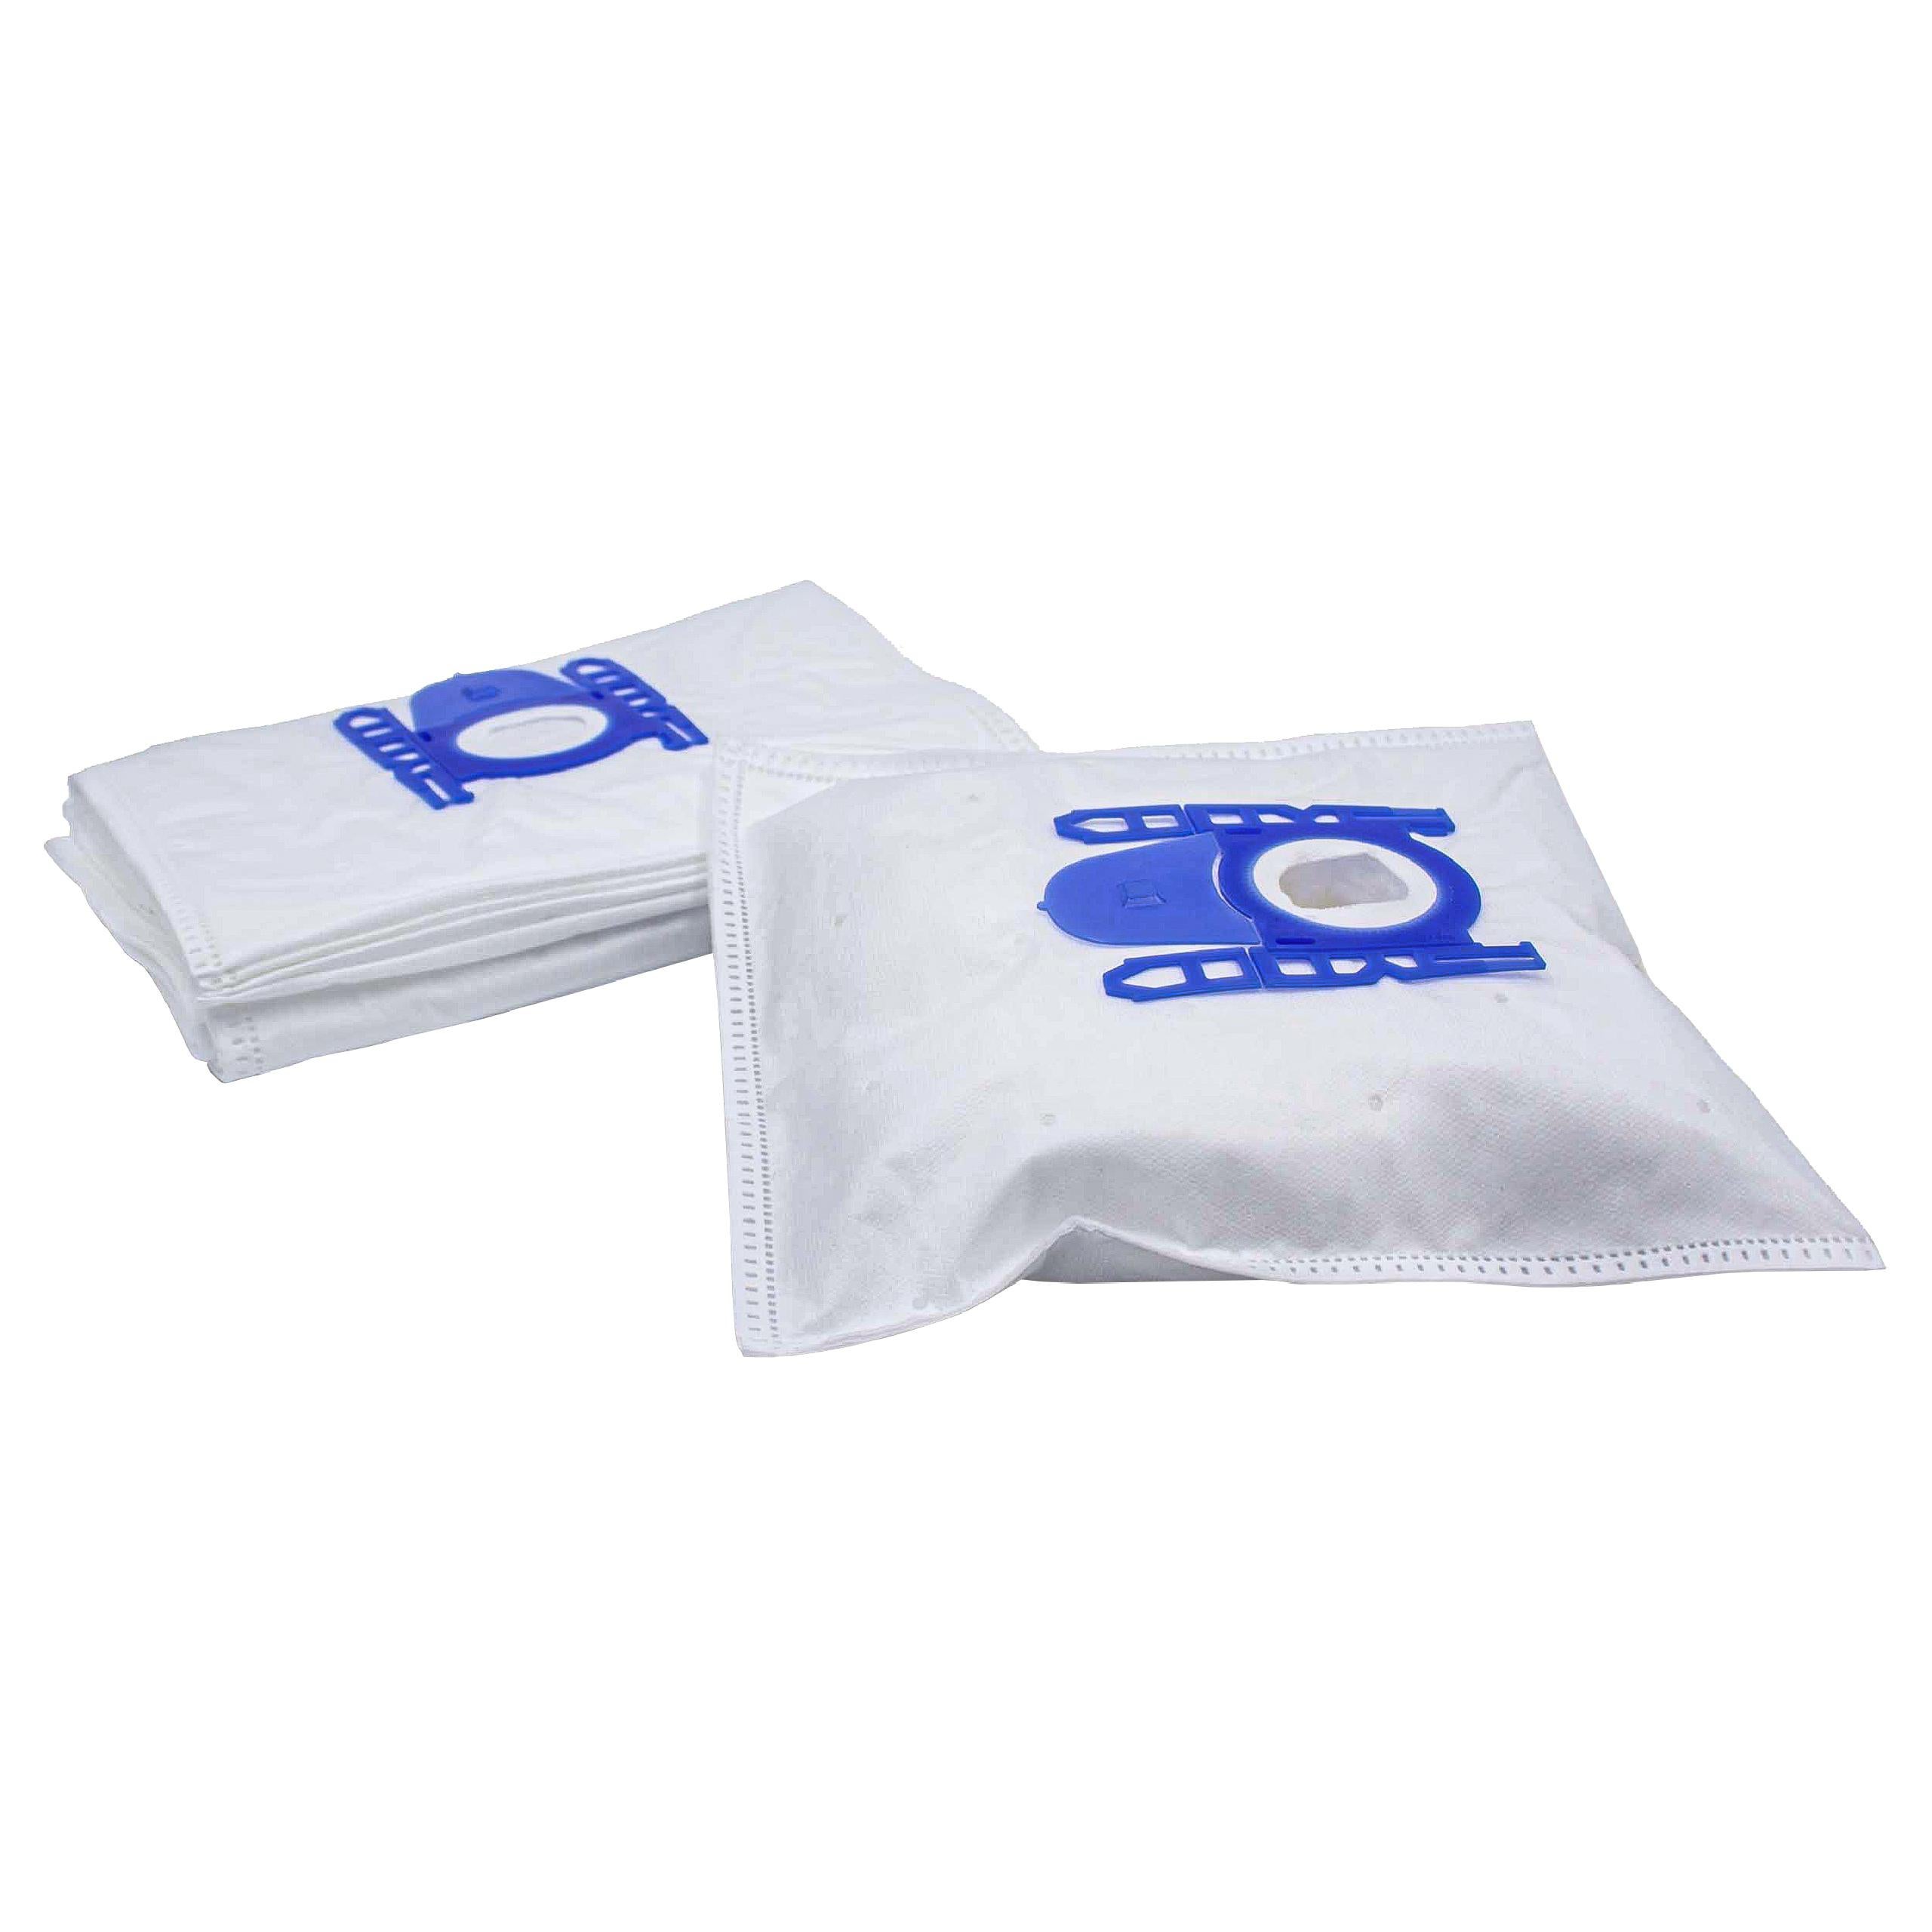 5 sacchetti per aspirapolvere di carta Bosch GL30 